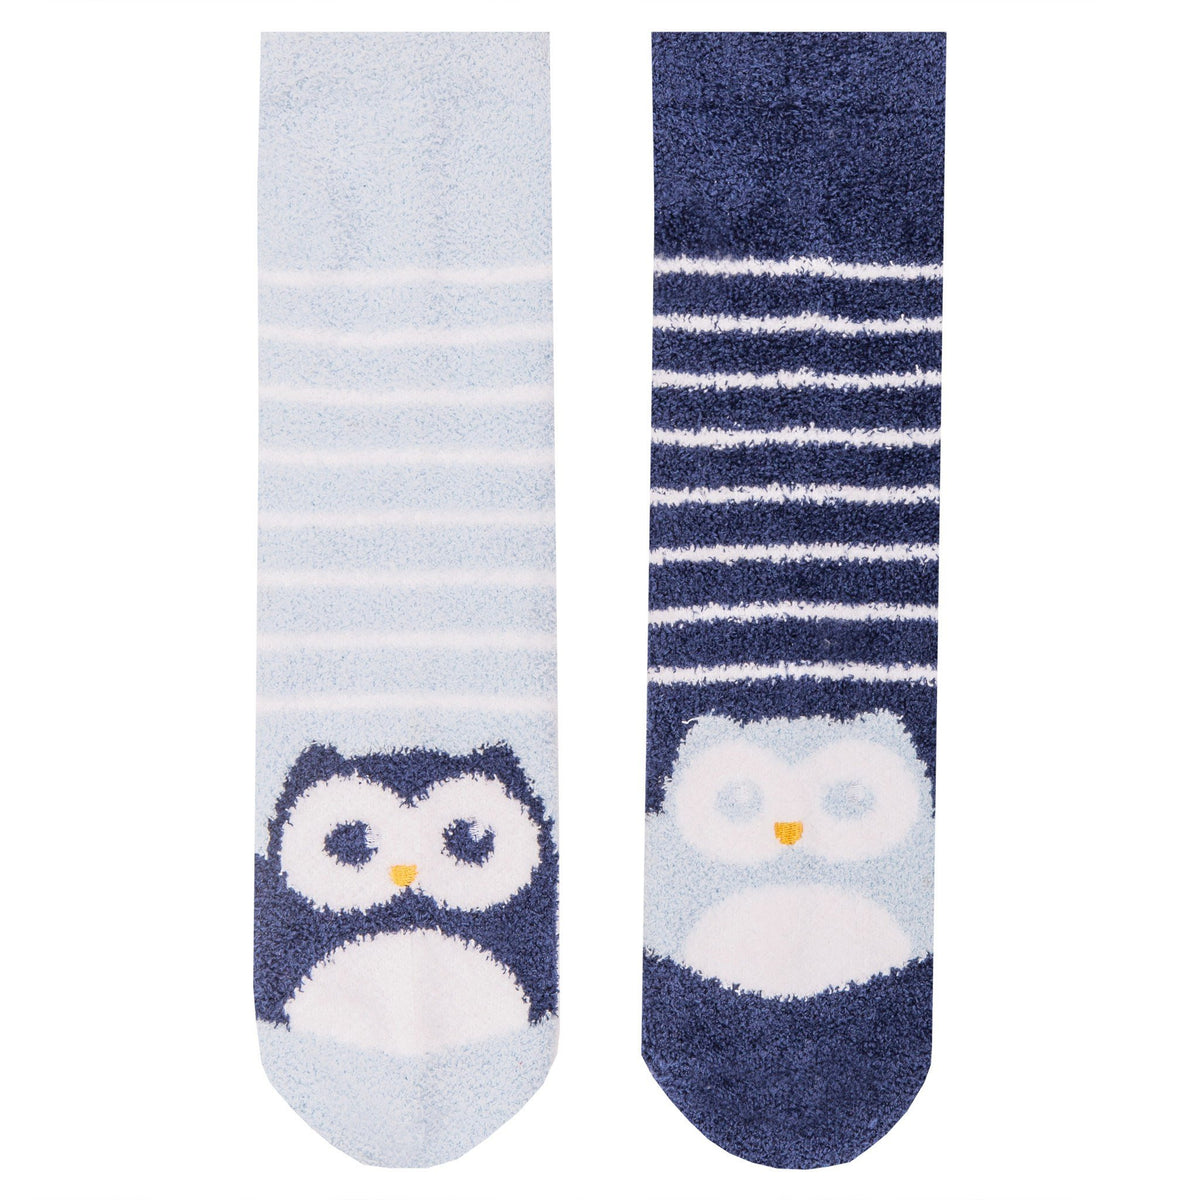 Women's Soft Anti-Skid Micro-Plush Winter Crew Socks - Set A6 - Owl [Gift Packaged]